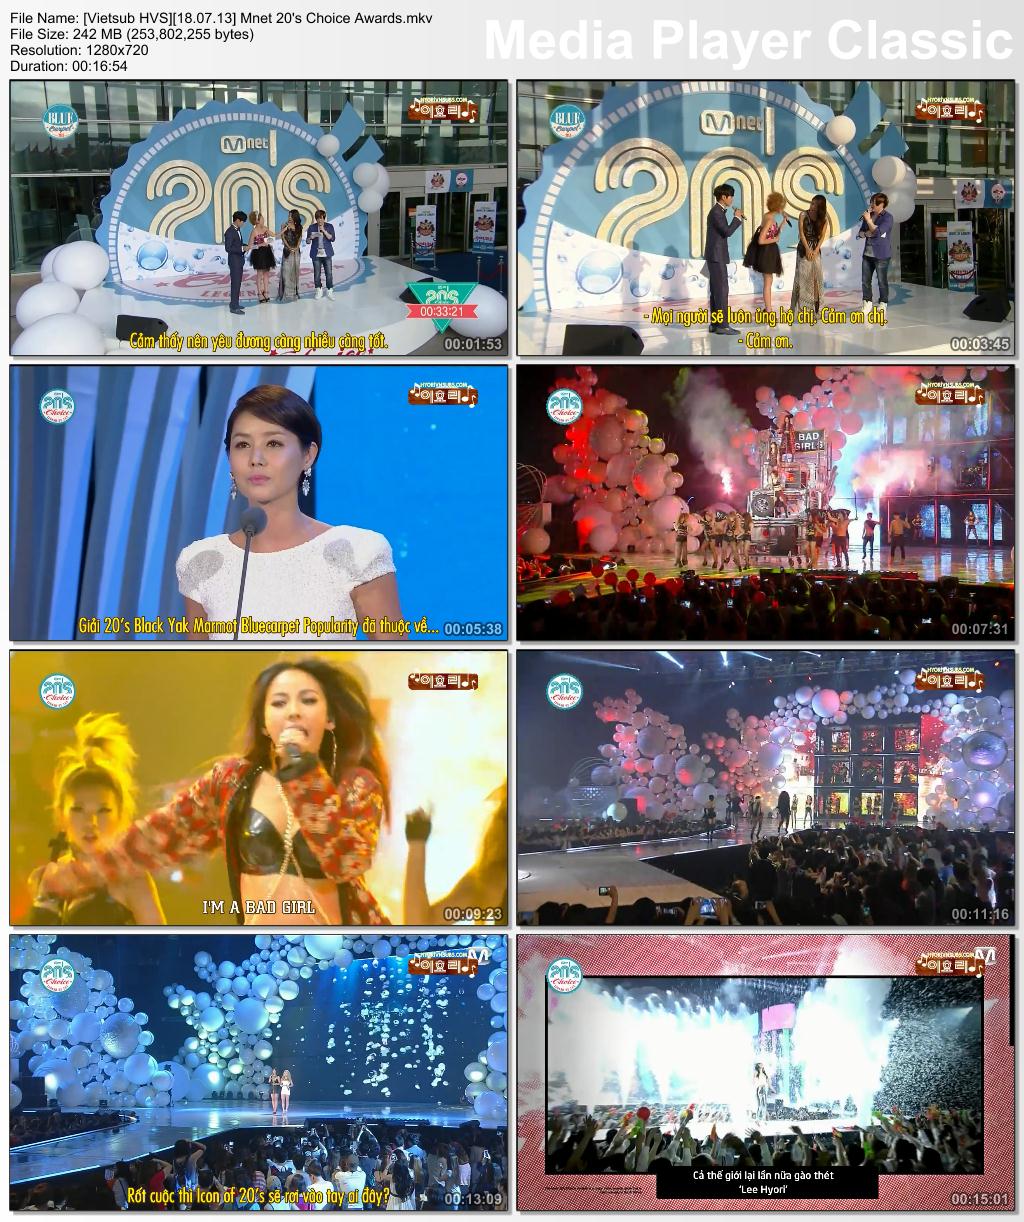 [HOT Vietsub][18.07.13] 2013 Mnet 20's Choice Awards - Page 2 %255BVietsub+HVS%255D%255B18.07.13%255D+Mnet+20%2527s+Choice+Awards.mkv_thumbs_%255B2013.07.22_02.16.24%255D